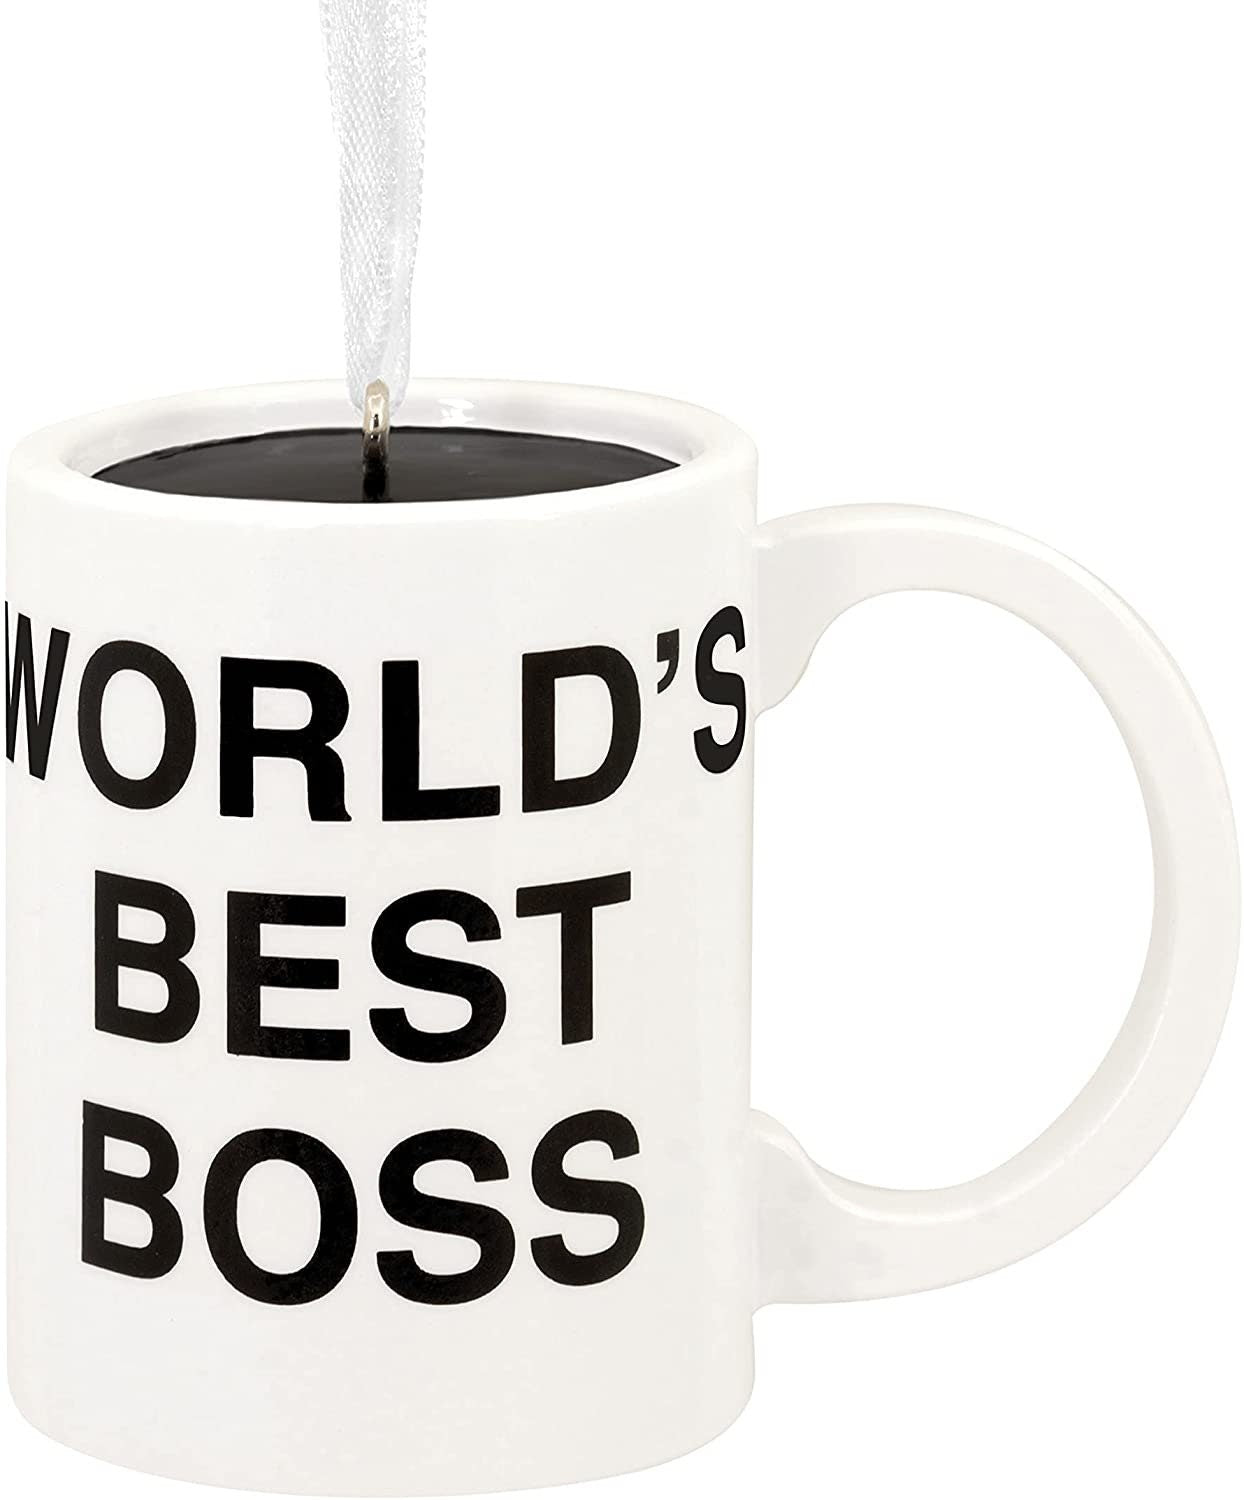 Hallmark The Office World's Best Boss Coffee Mug Christmas Ornament - 2HCM9116 - Dunder Mifflin